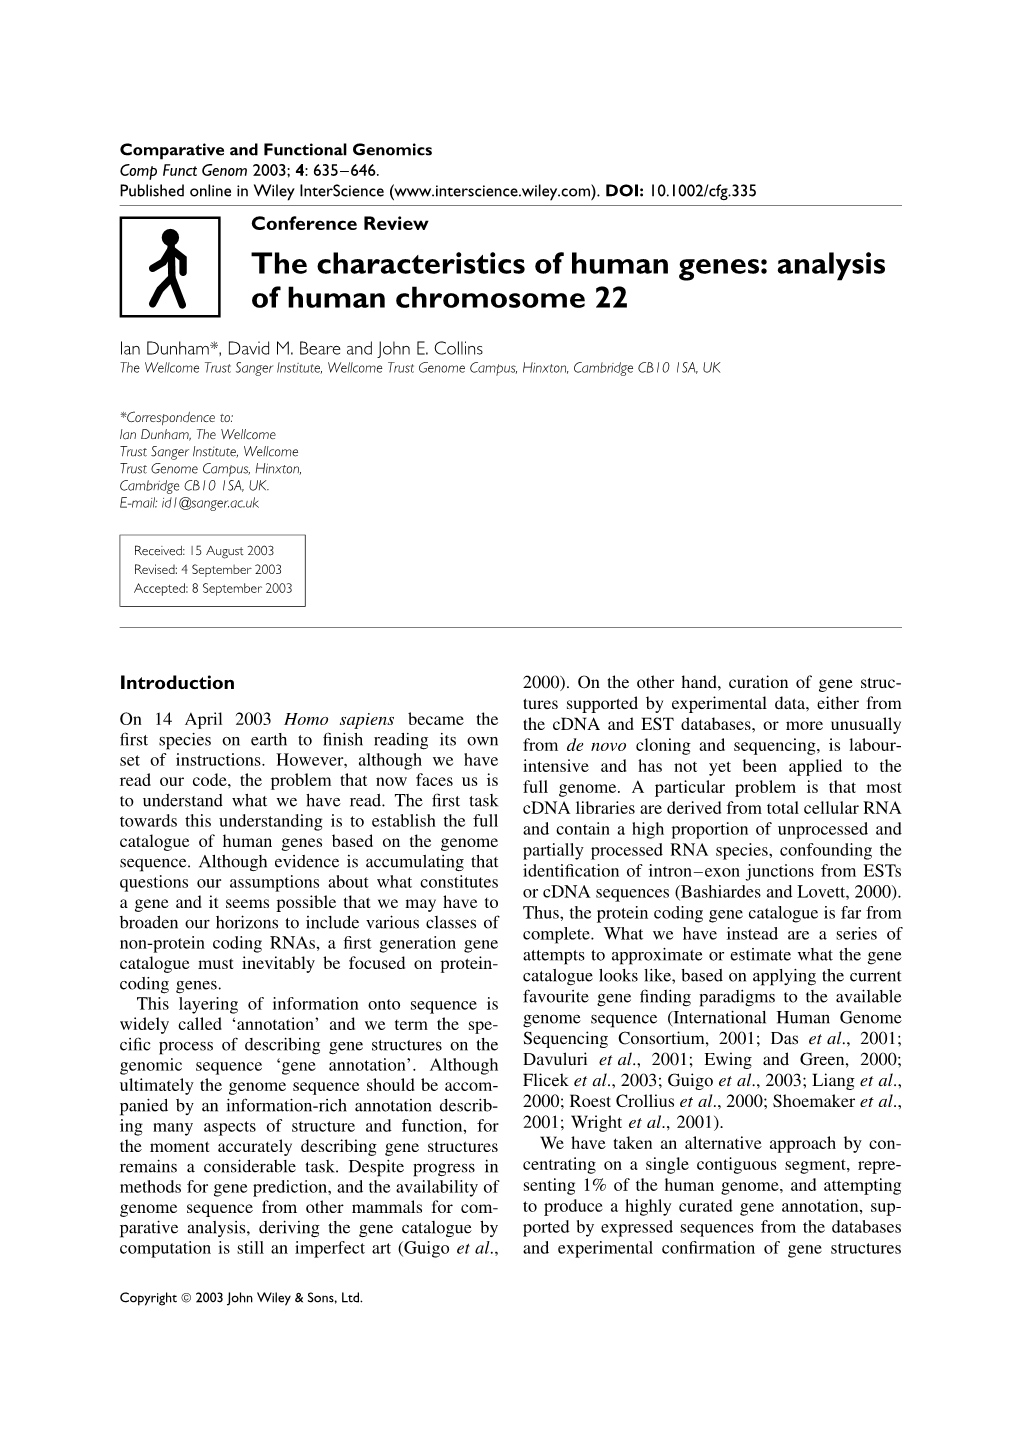 The Characteristics of Human Genes: Analysis of Human Chromosome 22